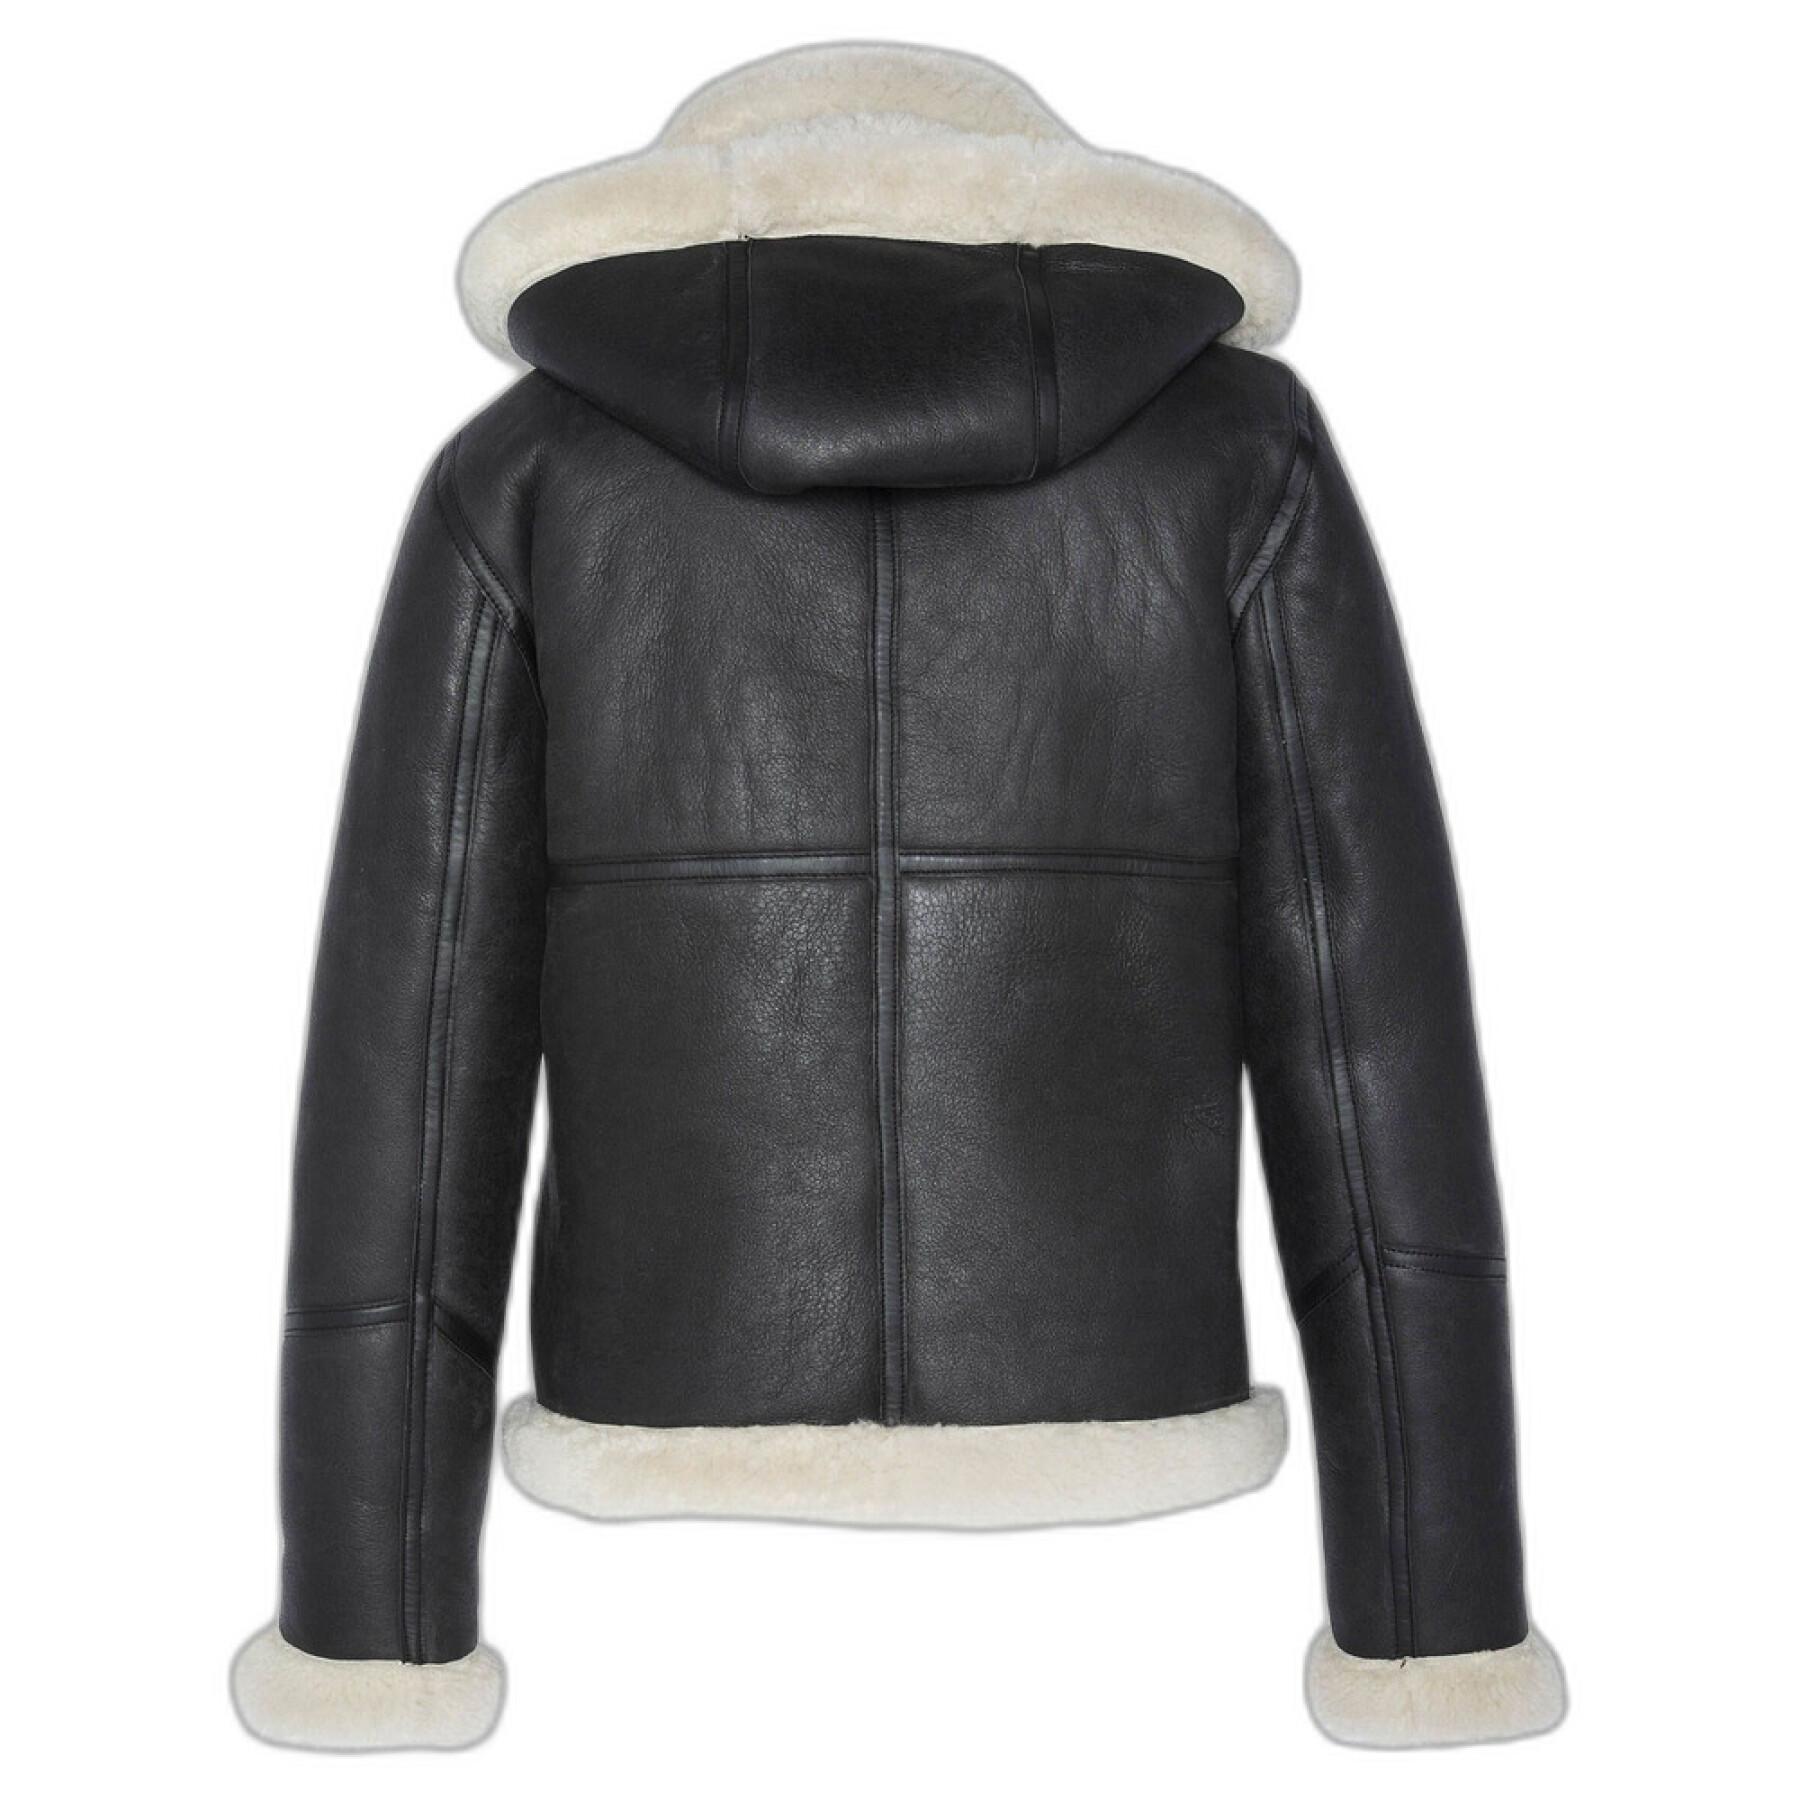 Removable hooded jacket for women Schott b-3